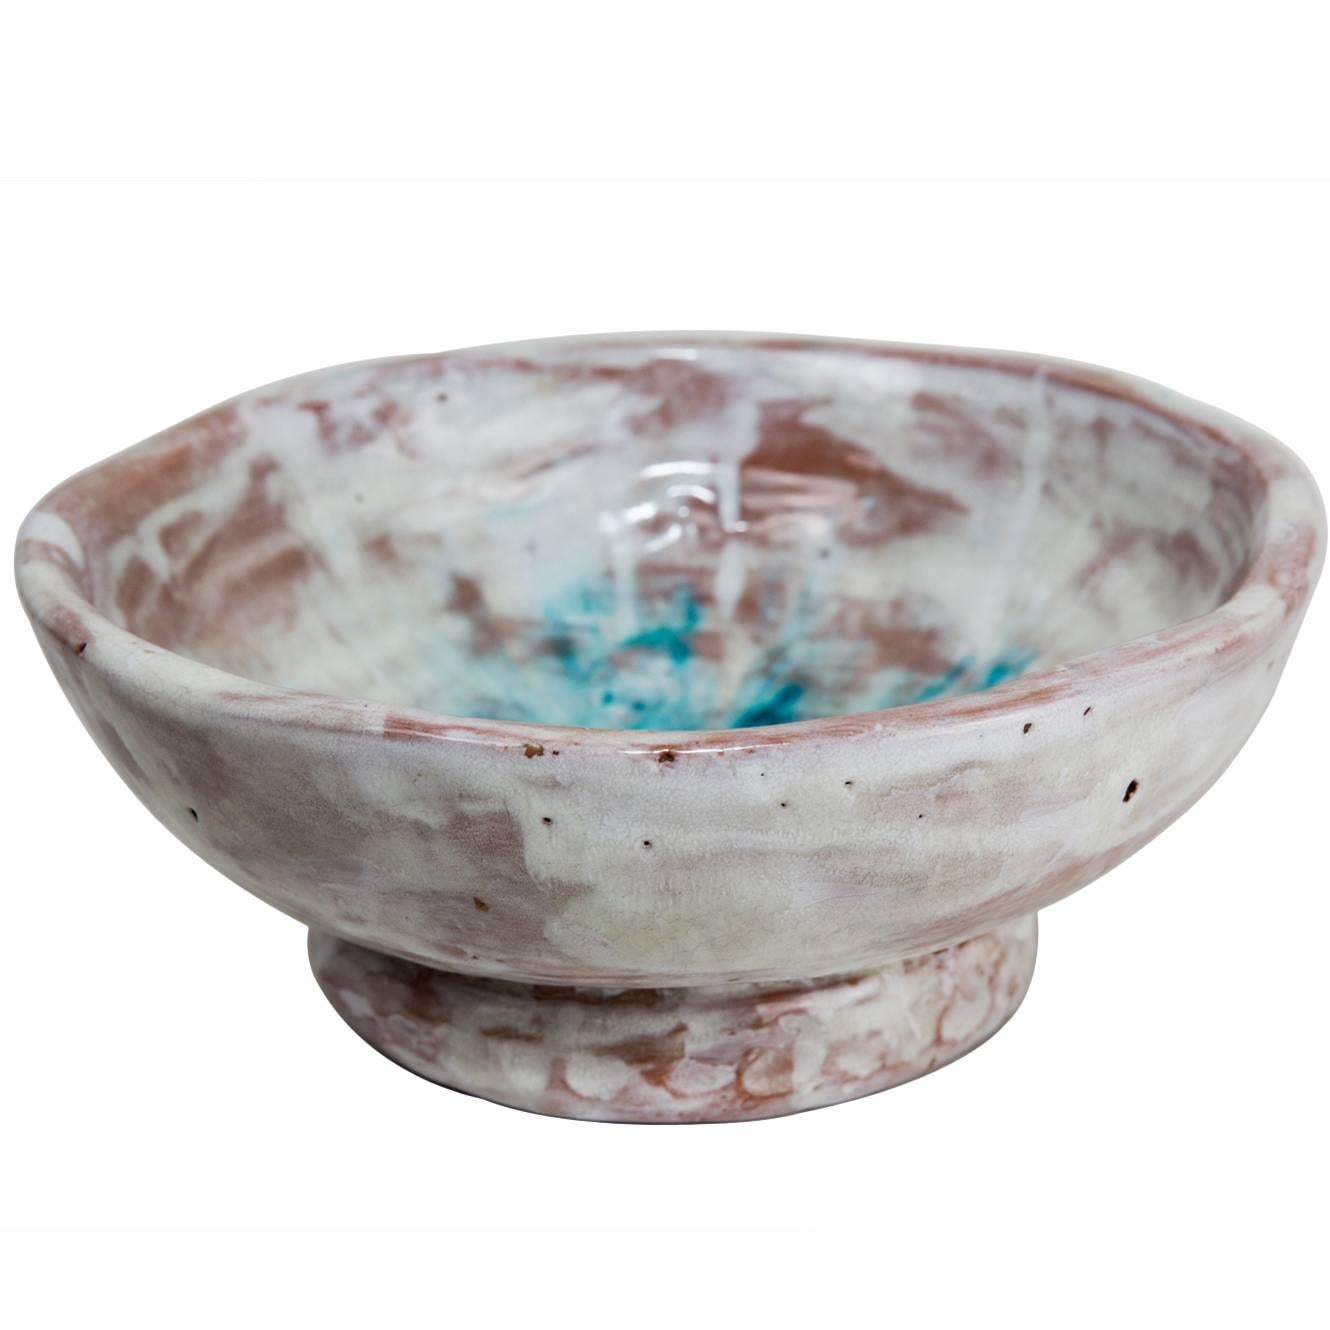 Alice Colonieu 1950s Large Ceramic Bowl For Sale